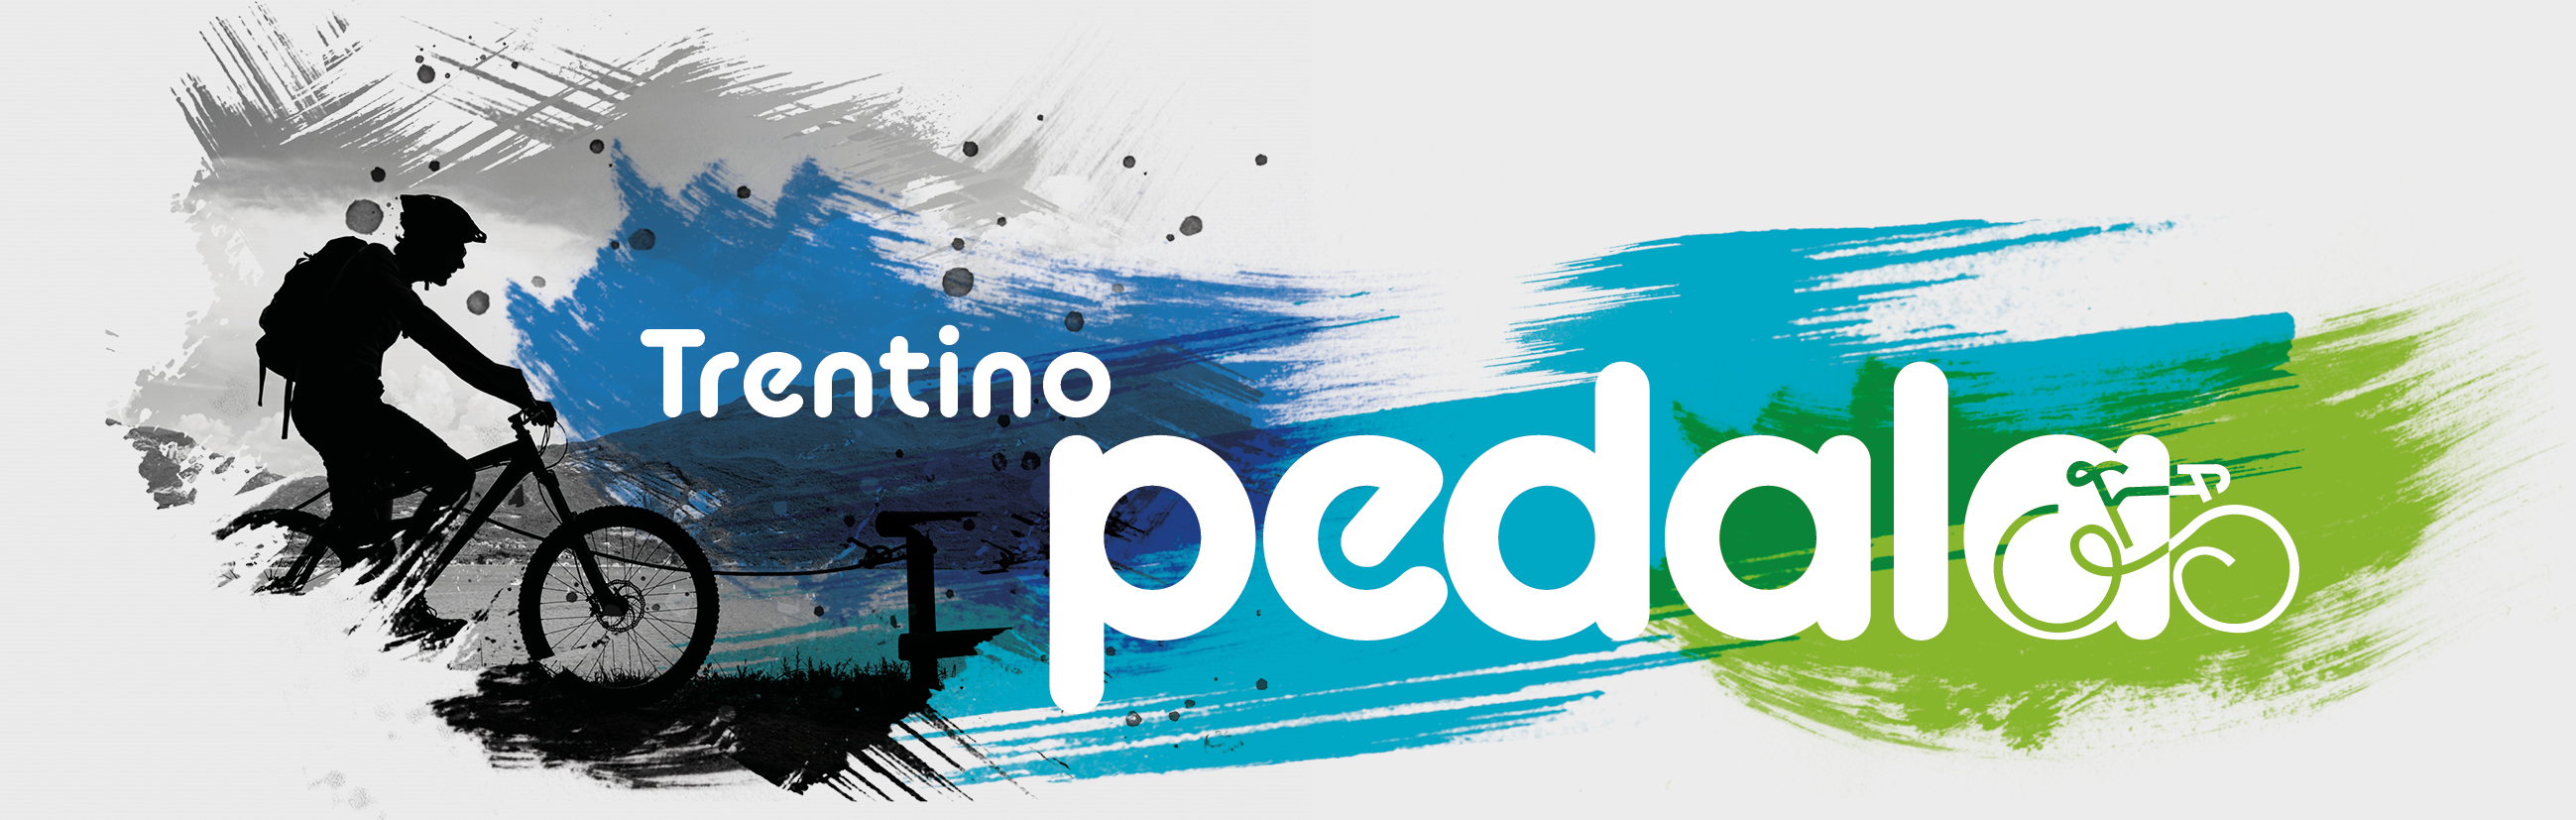 Trentino Pedala header